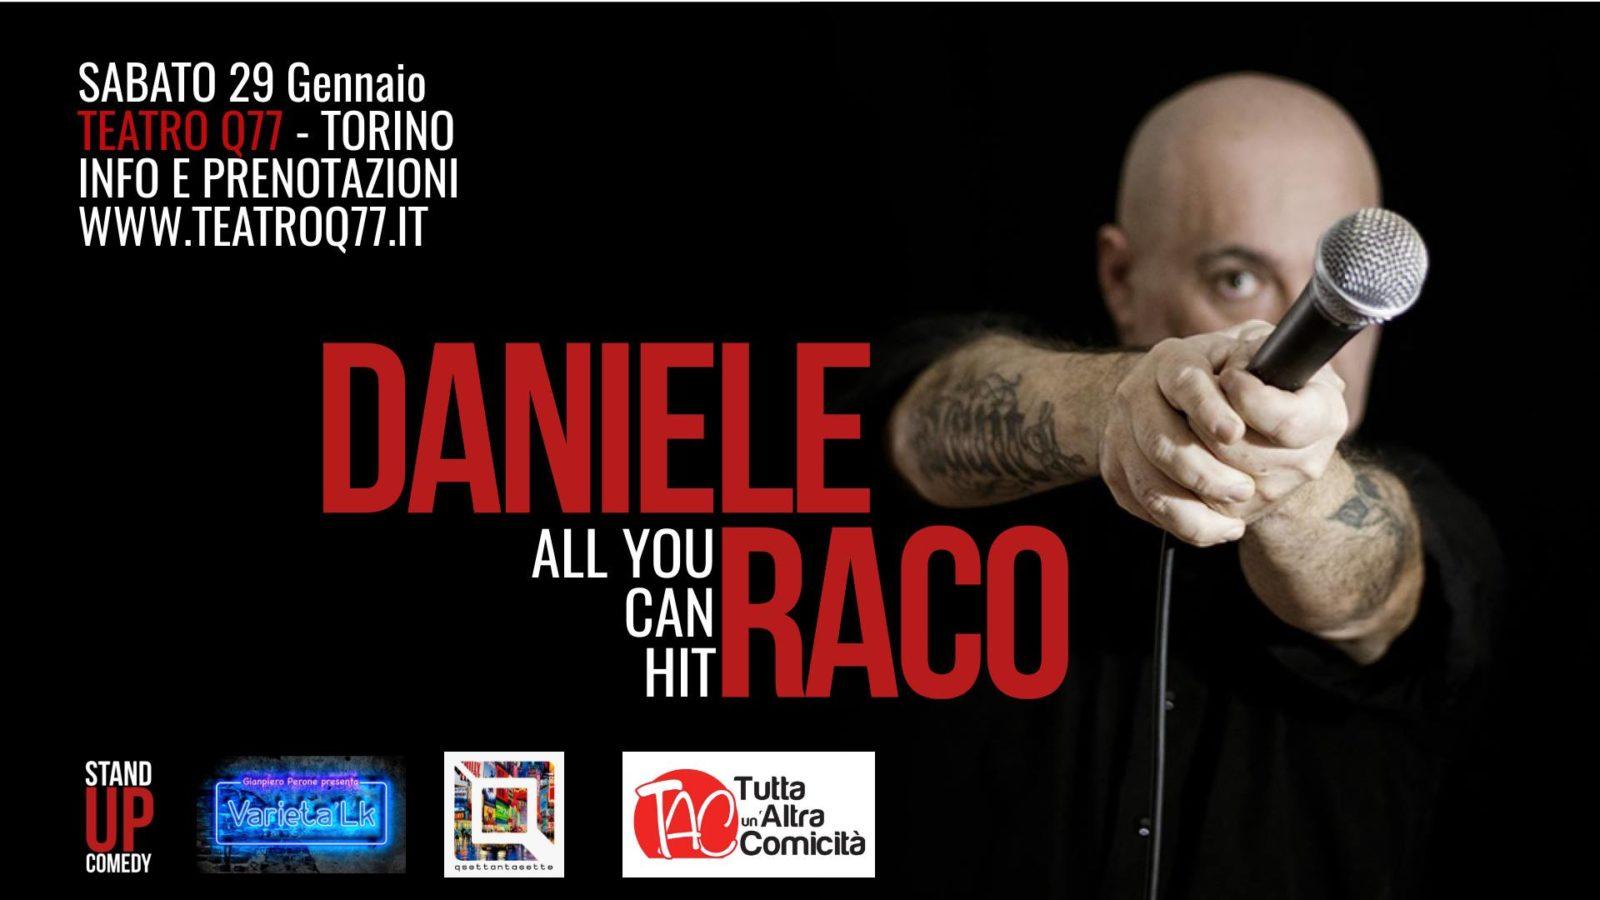 All you can hit - Daniele Raco - Sala Q77 Torino